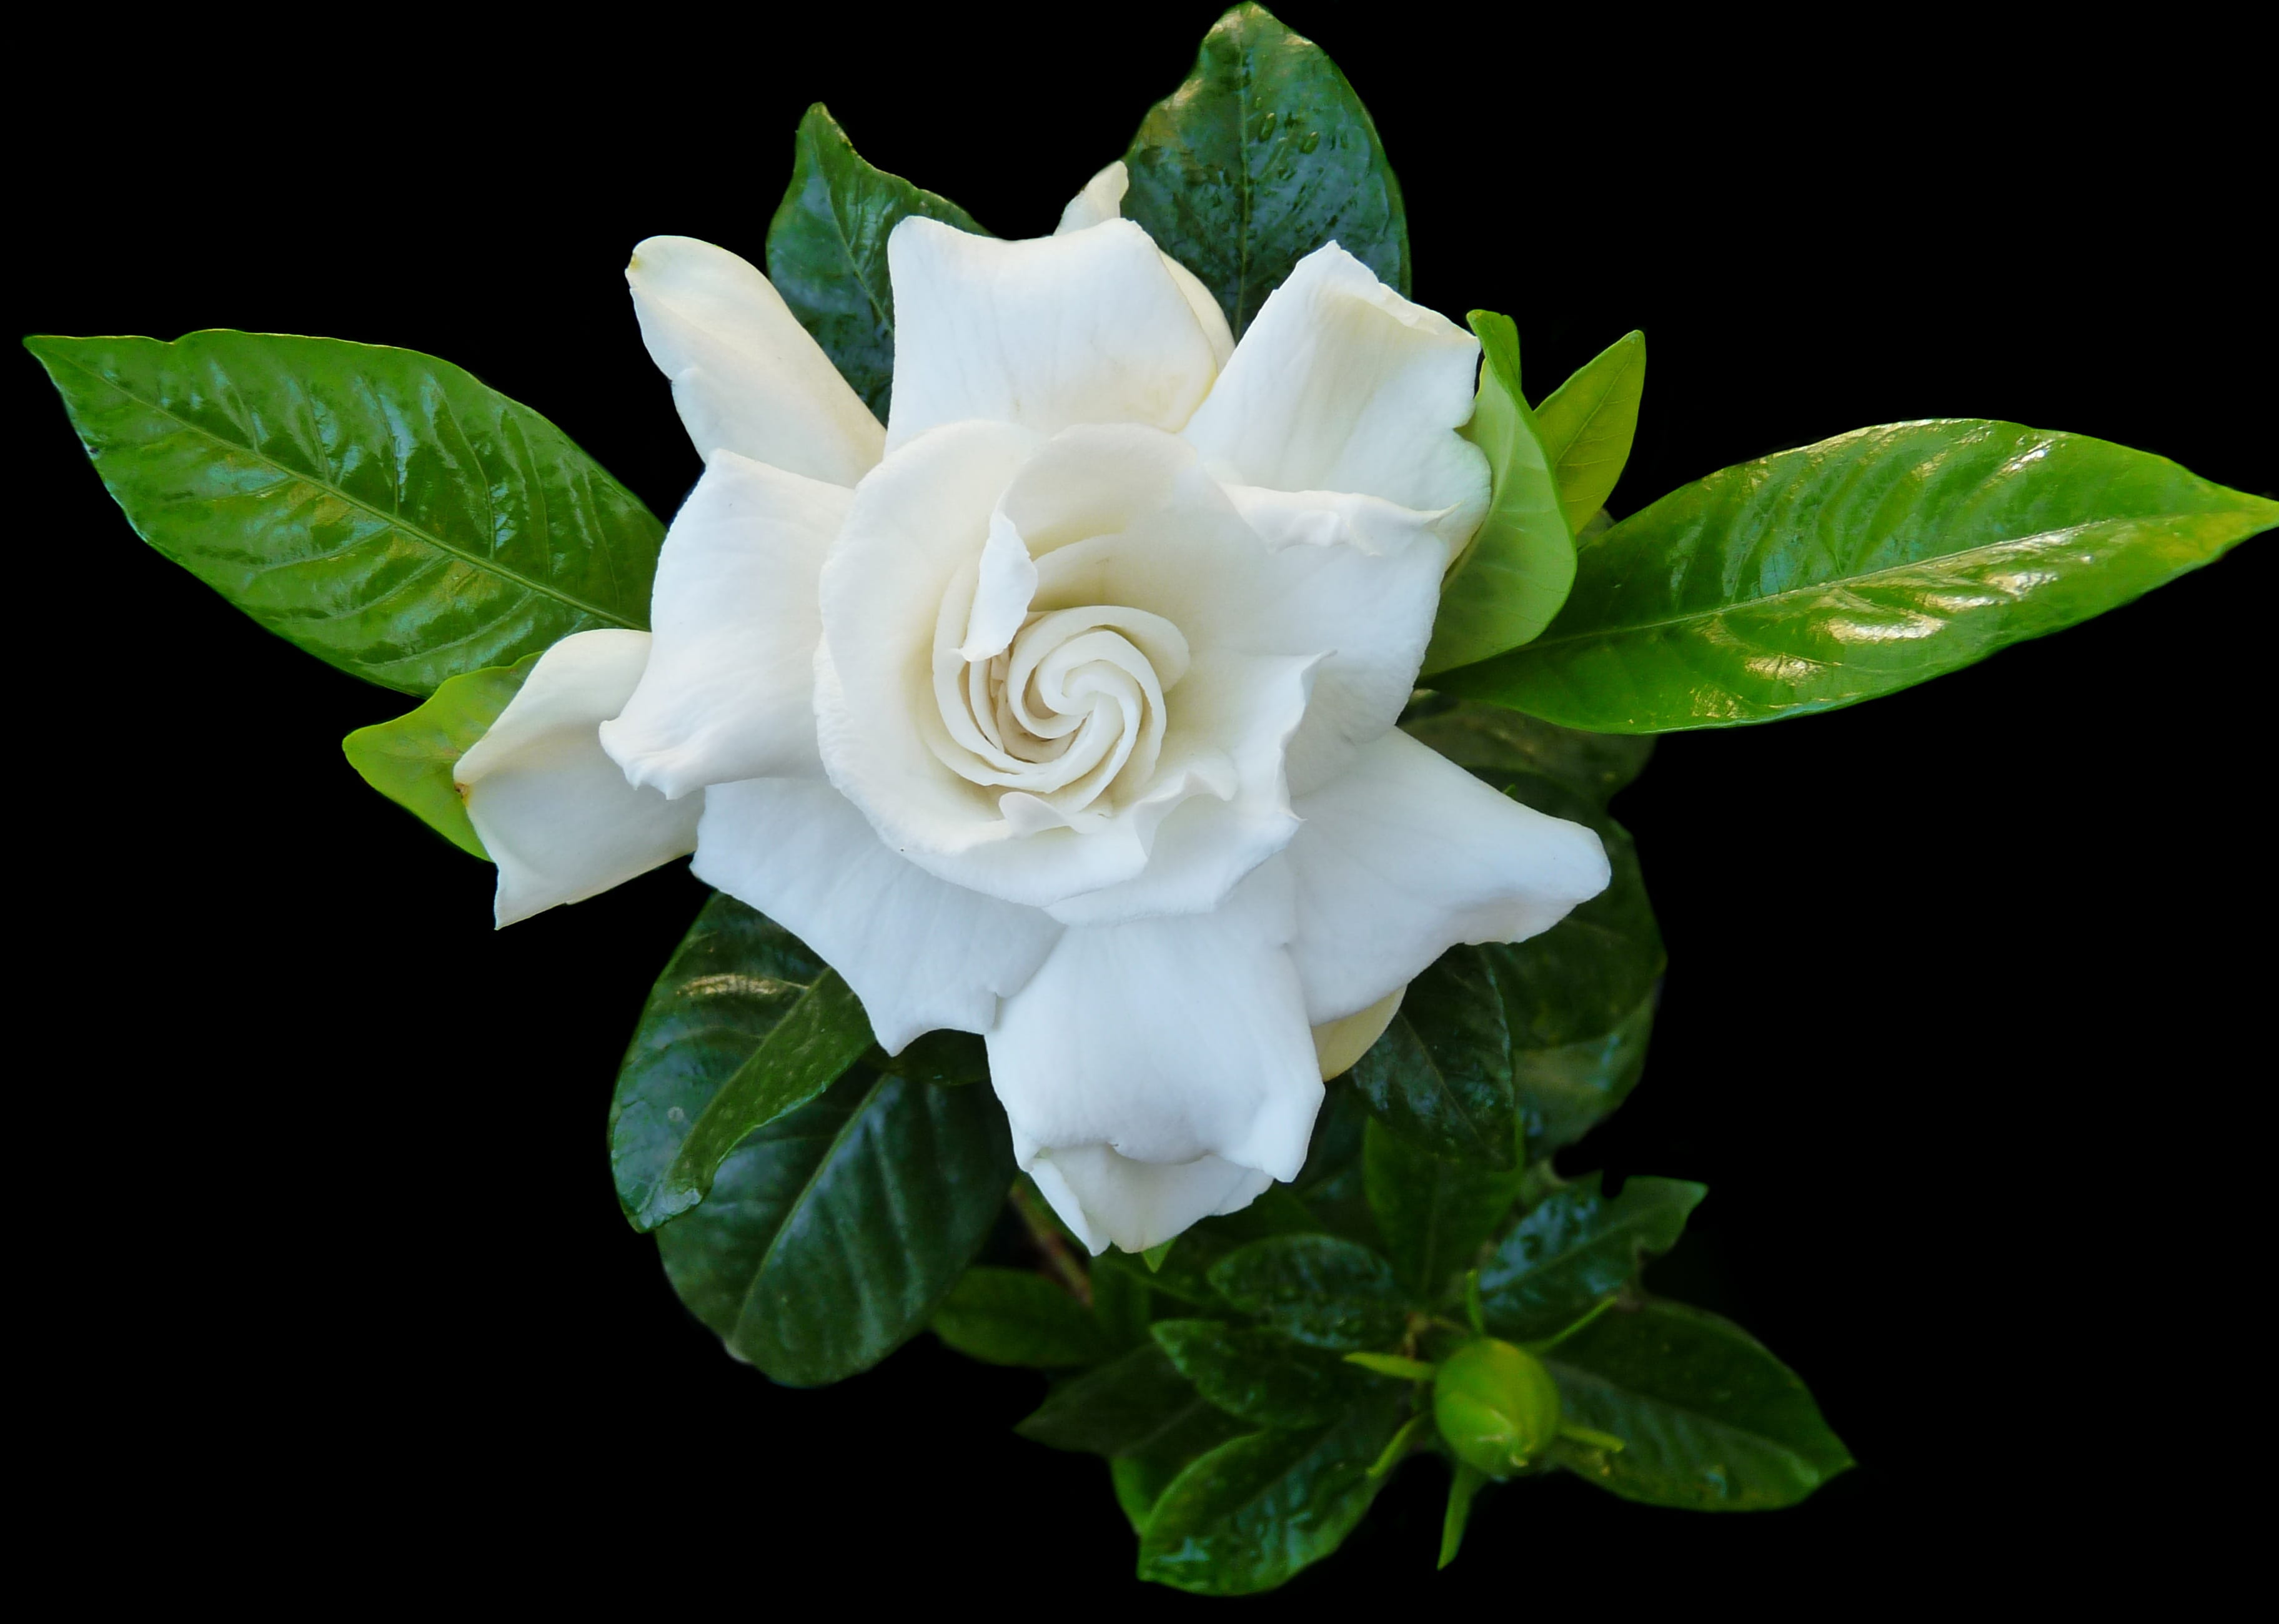 gardenia, flower, fragrant, perfume, nature, leaf, plant, close-up